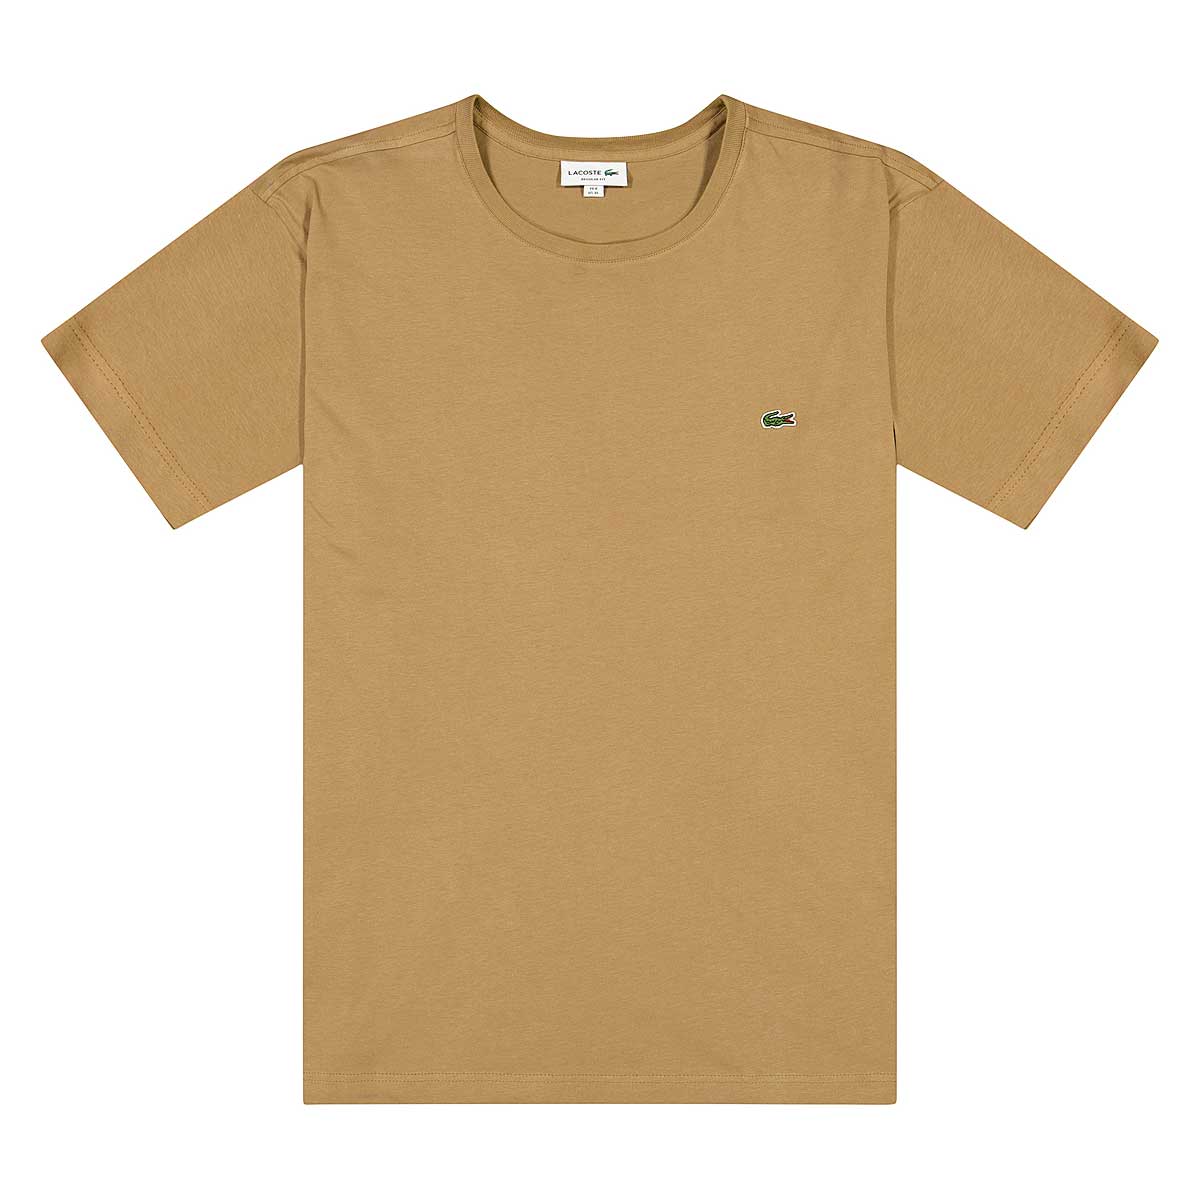 Lacoste Small Croc T-Shirt, Leafy